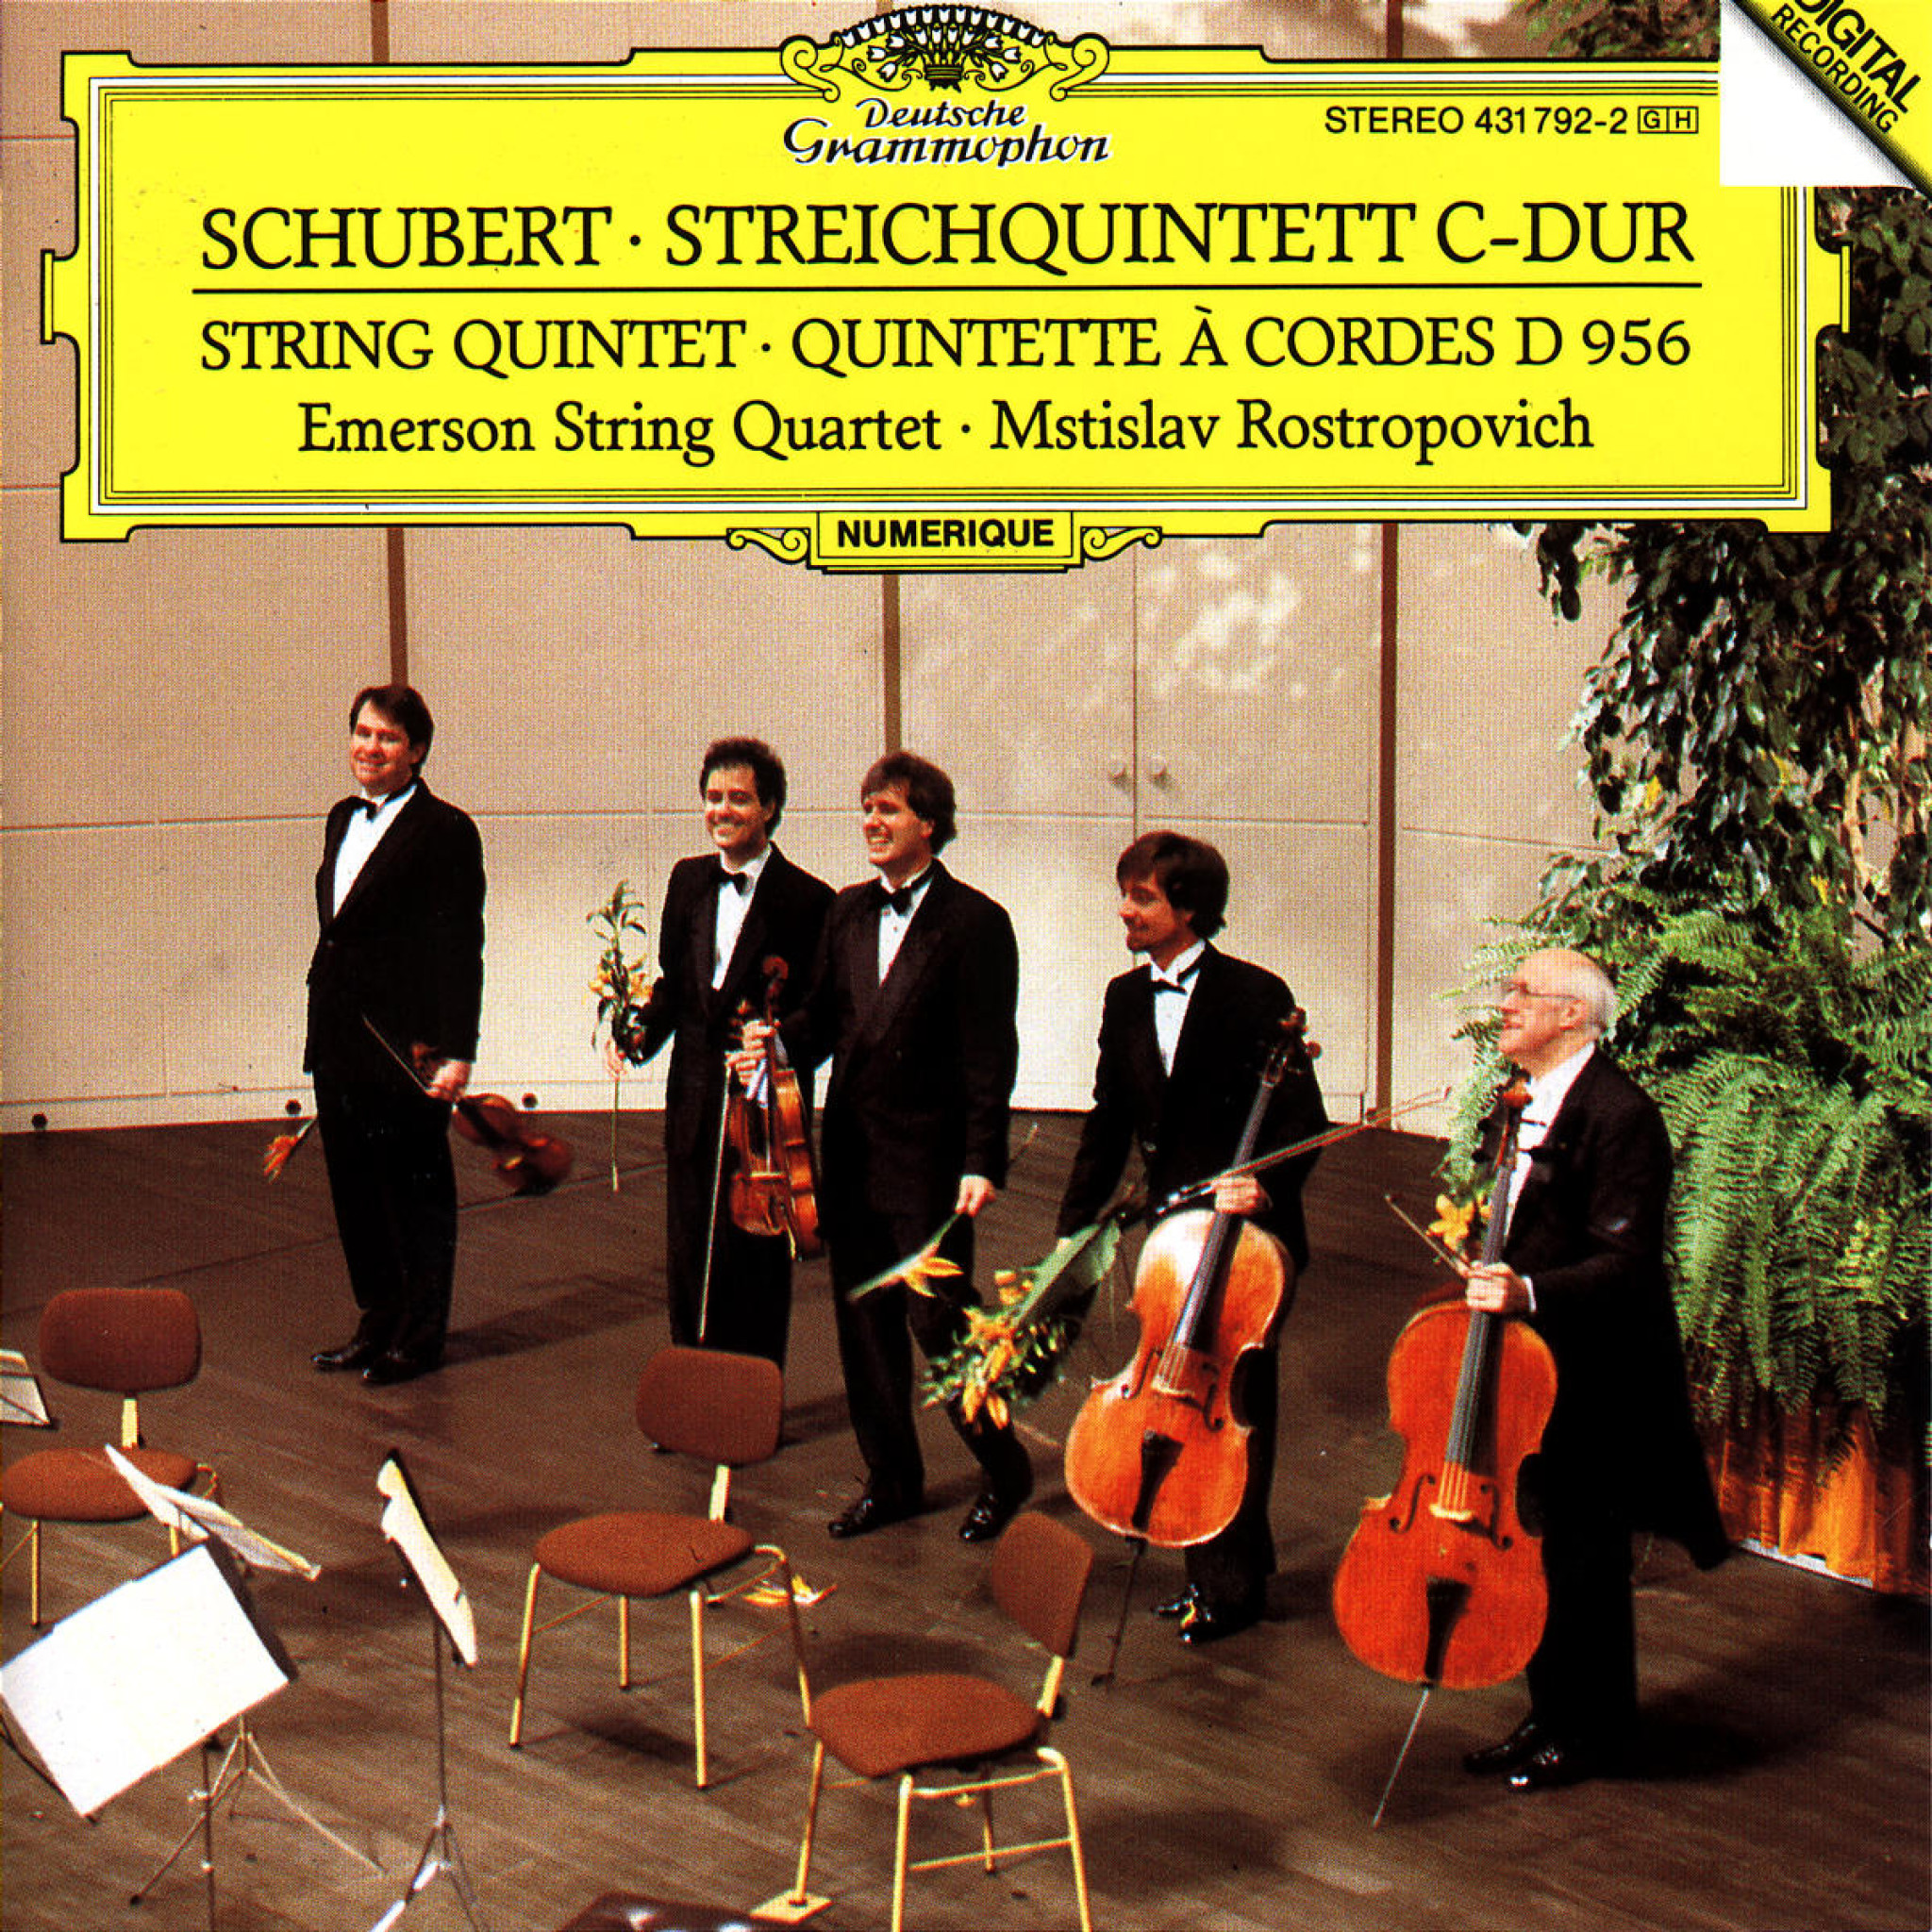 SCHUBERT String Quintet / Emerson String Quartet | Deutsche Grammophon